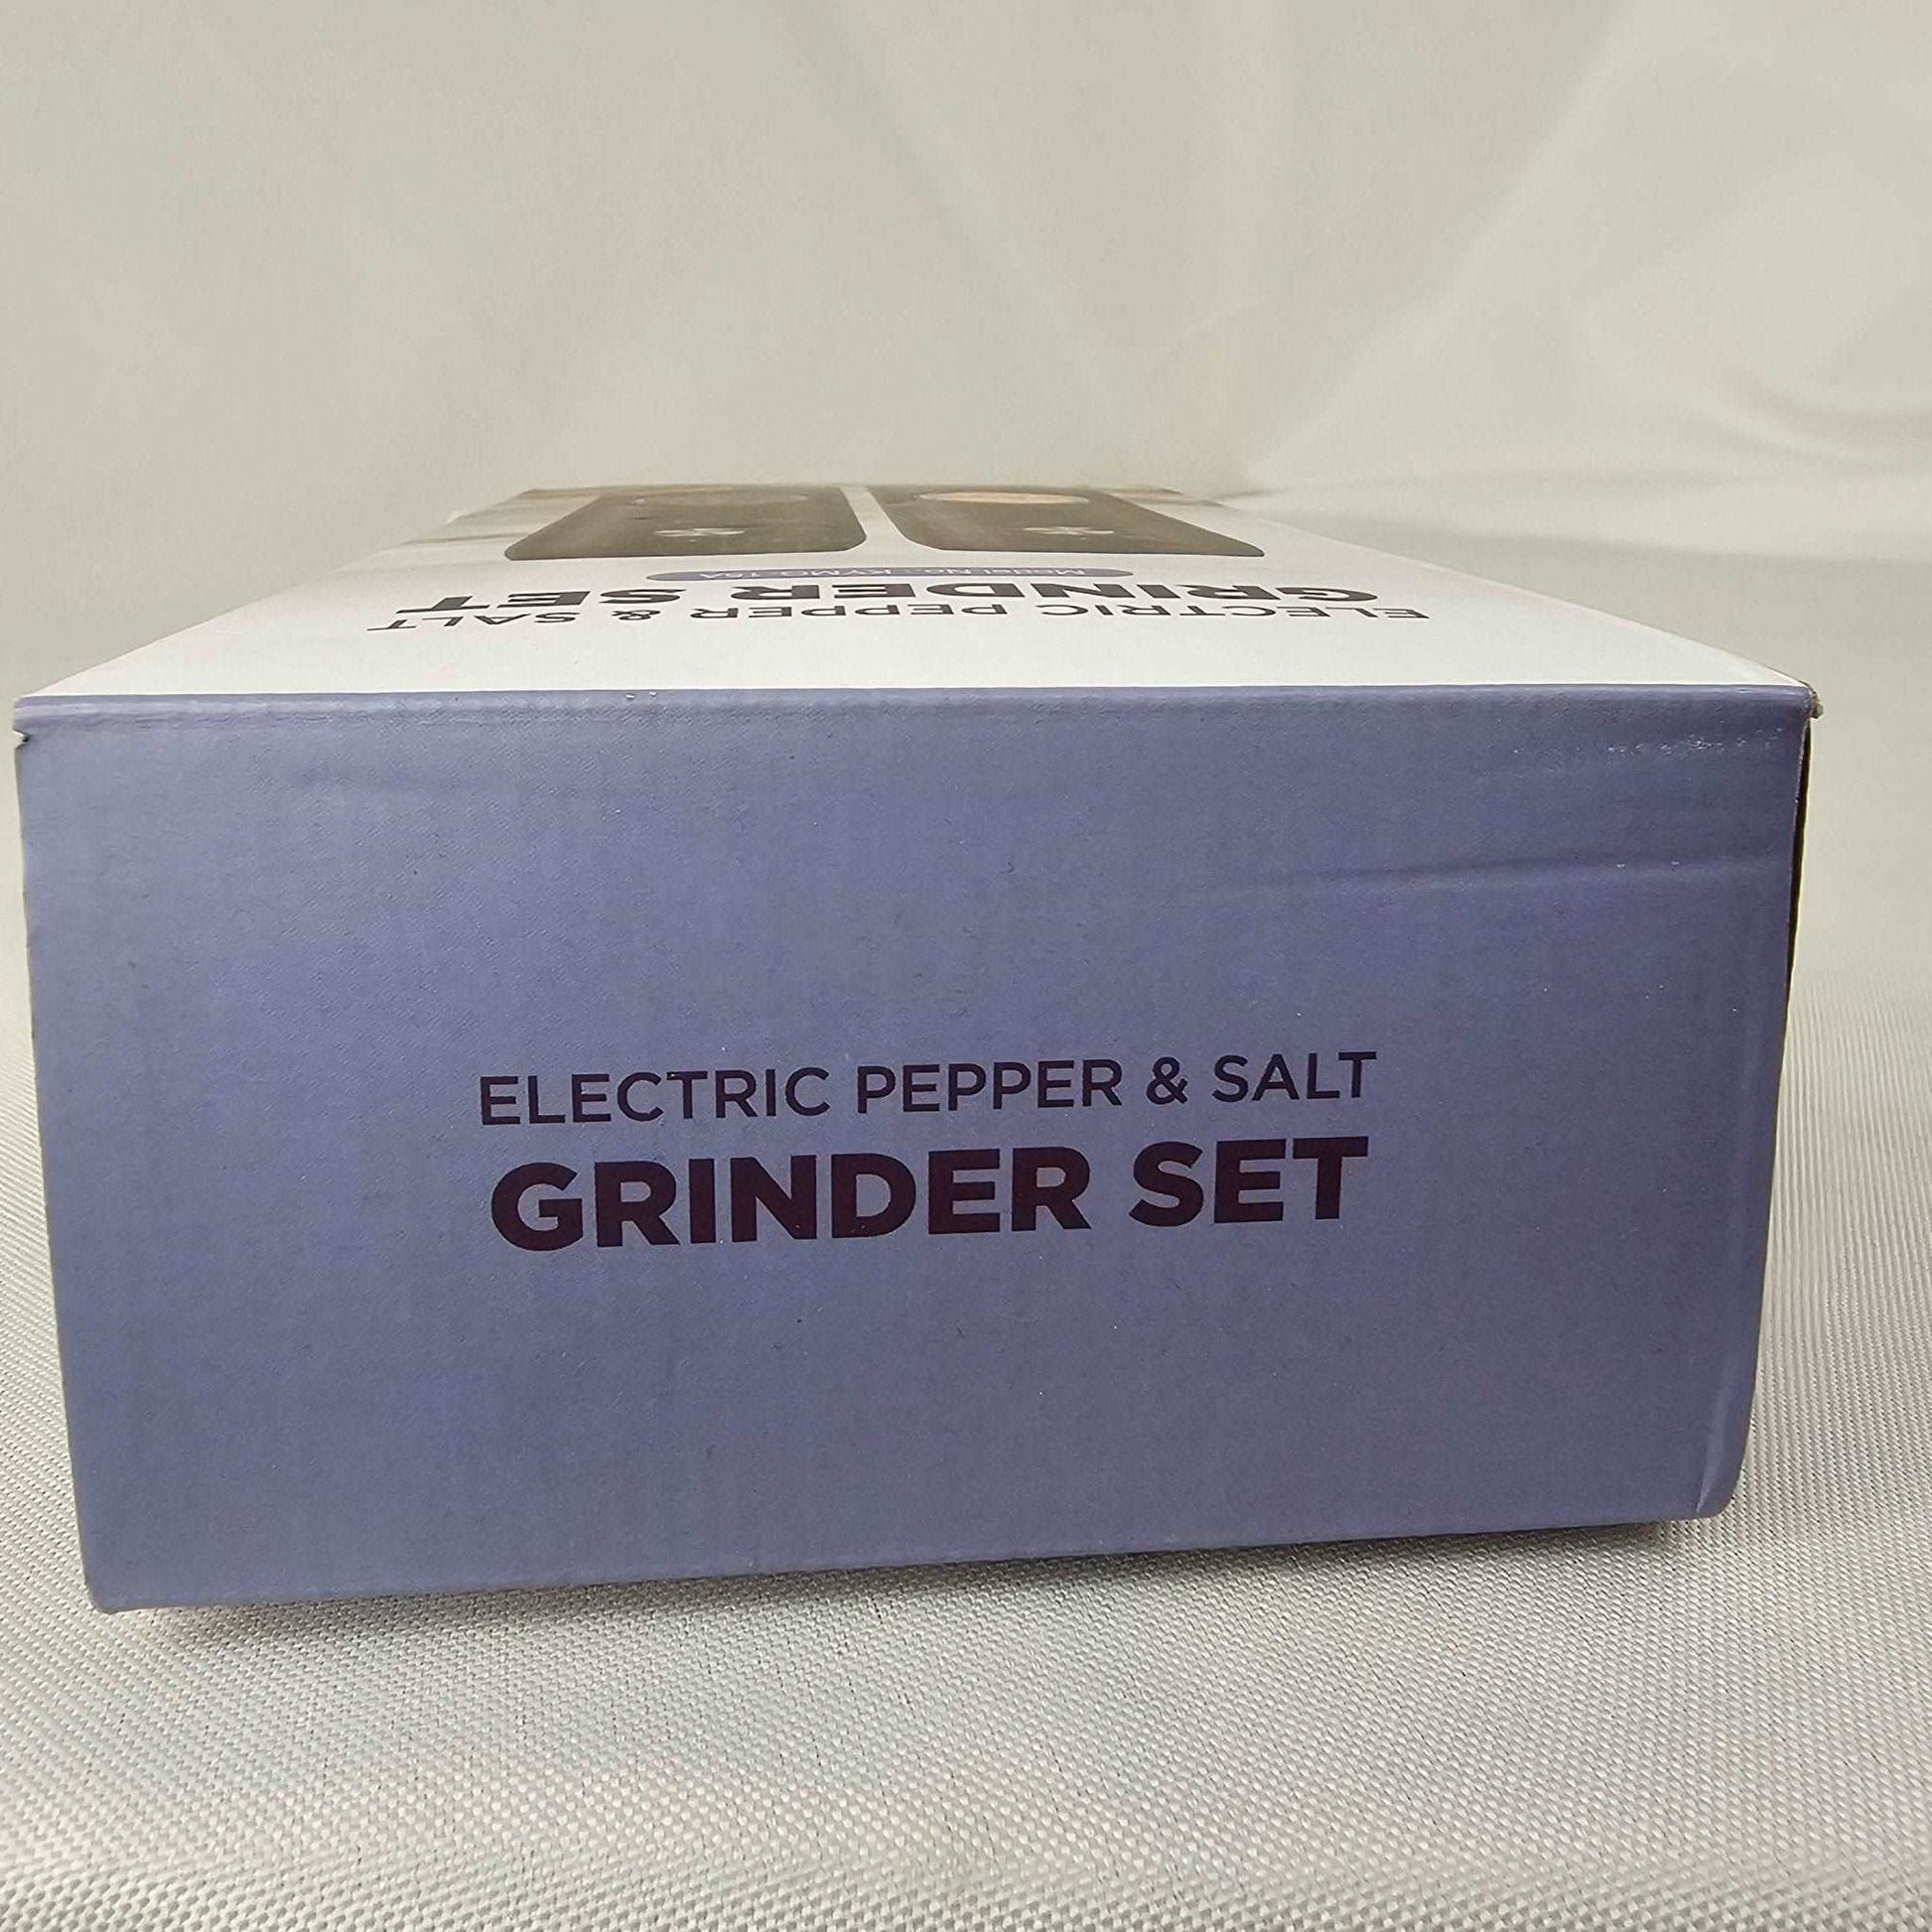 Electric Pepper Salt Grinder Set KYMQ-15A - DQ Distribution